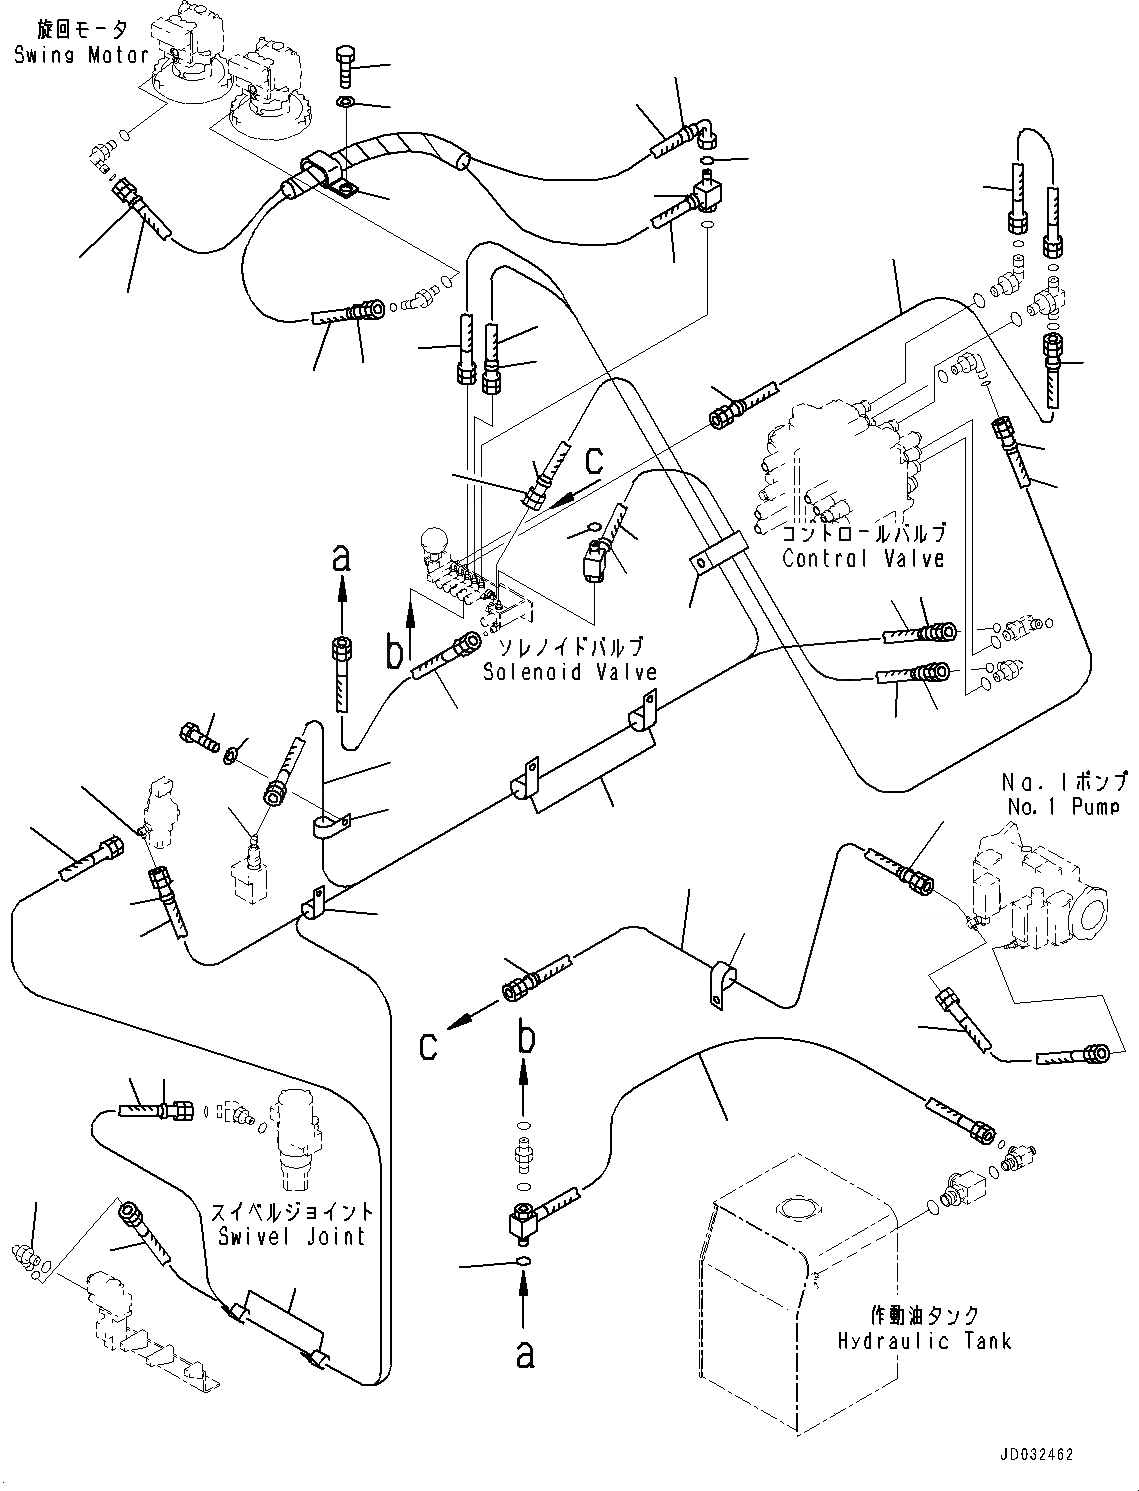 Схема запчастей Komatsu PC600LC-8E0 - СОЛЕНОИДНЫЙ КЛАПАН ТРУБЫ, ШЛАНГИ (№-) СОЛЕНОИДНЫЙ КЛАПАН ТРУБЫ